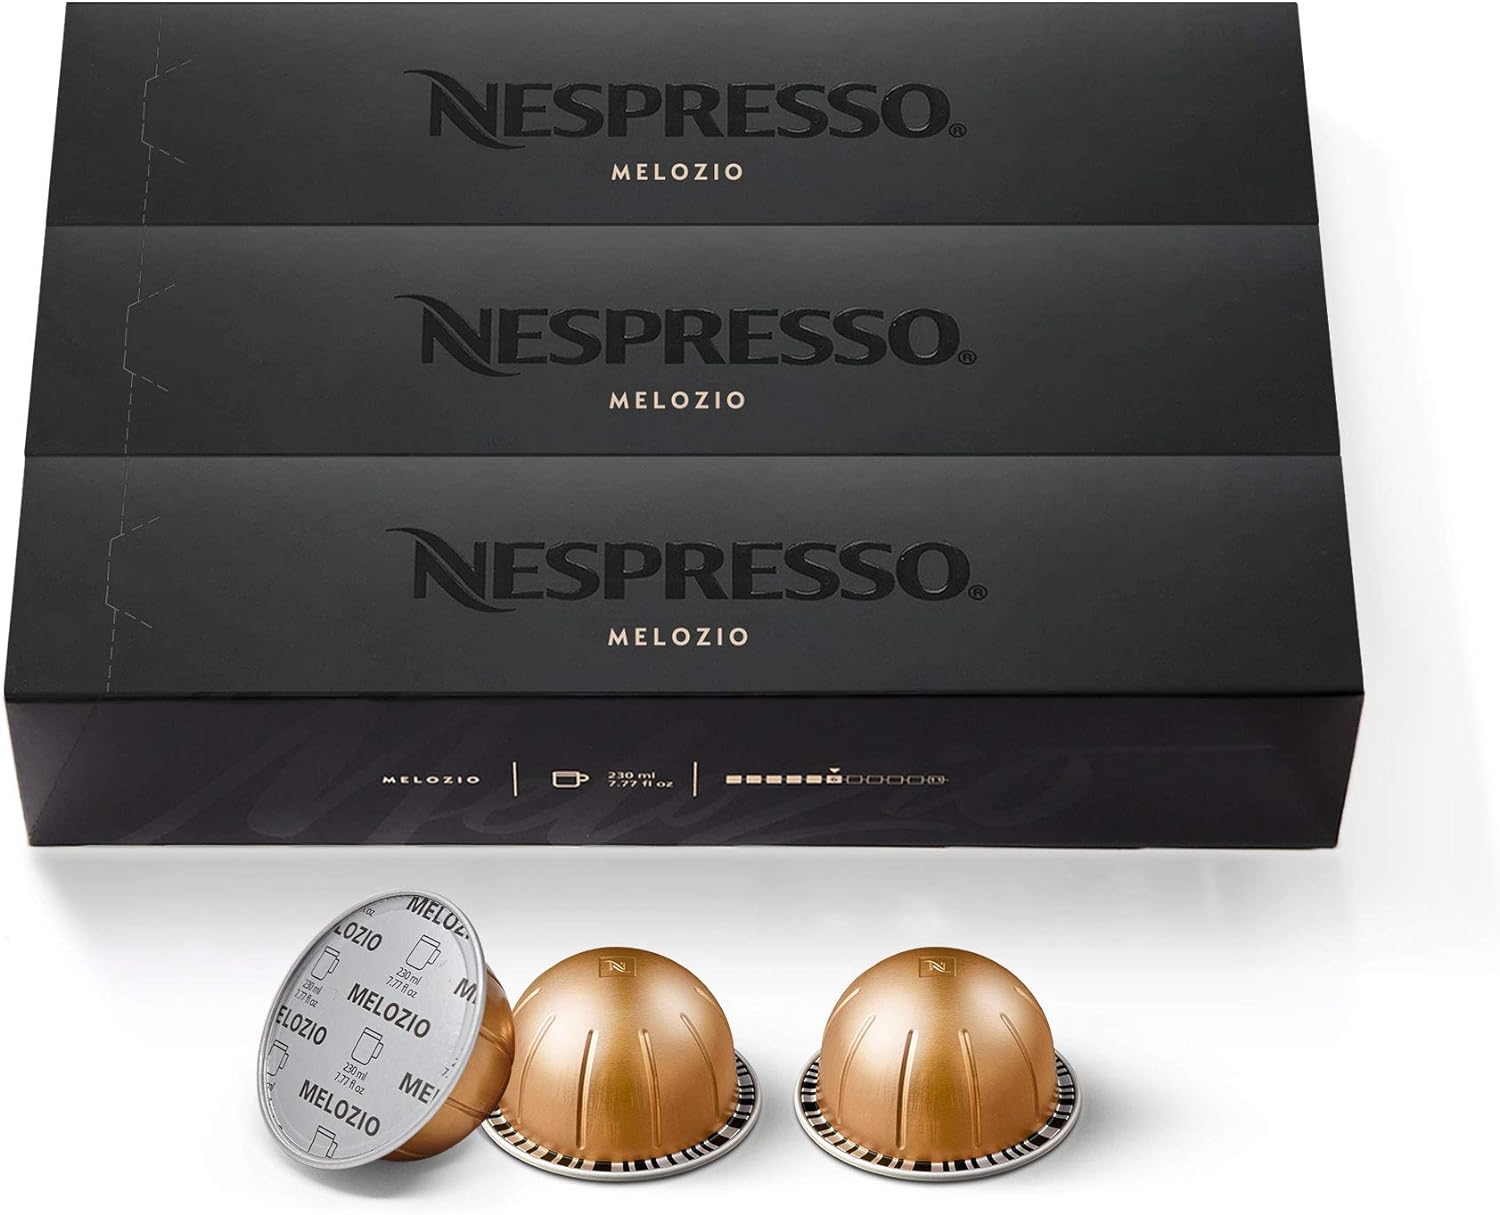 Nespresso Capsules VertuoLine: A Flavorful Coffee Experience